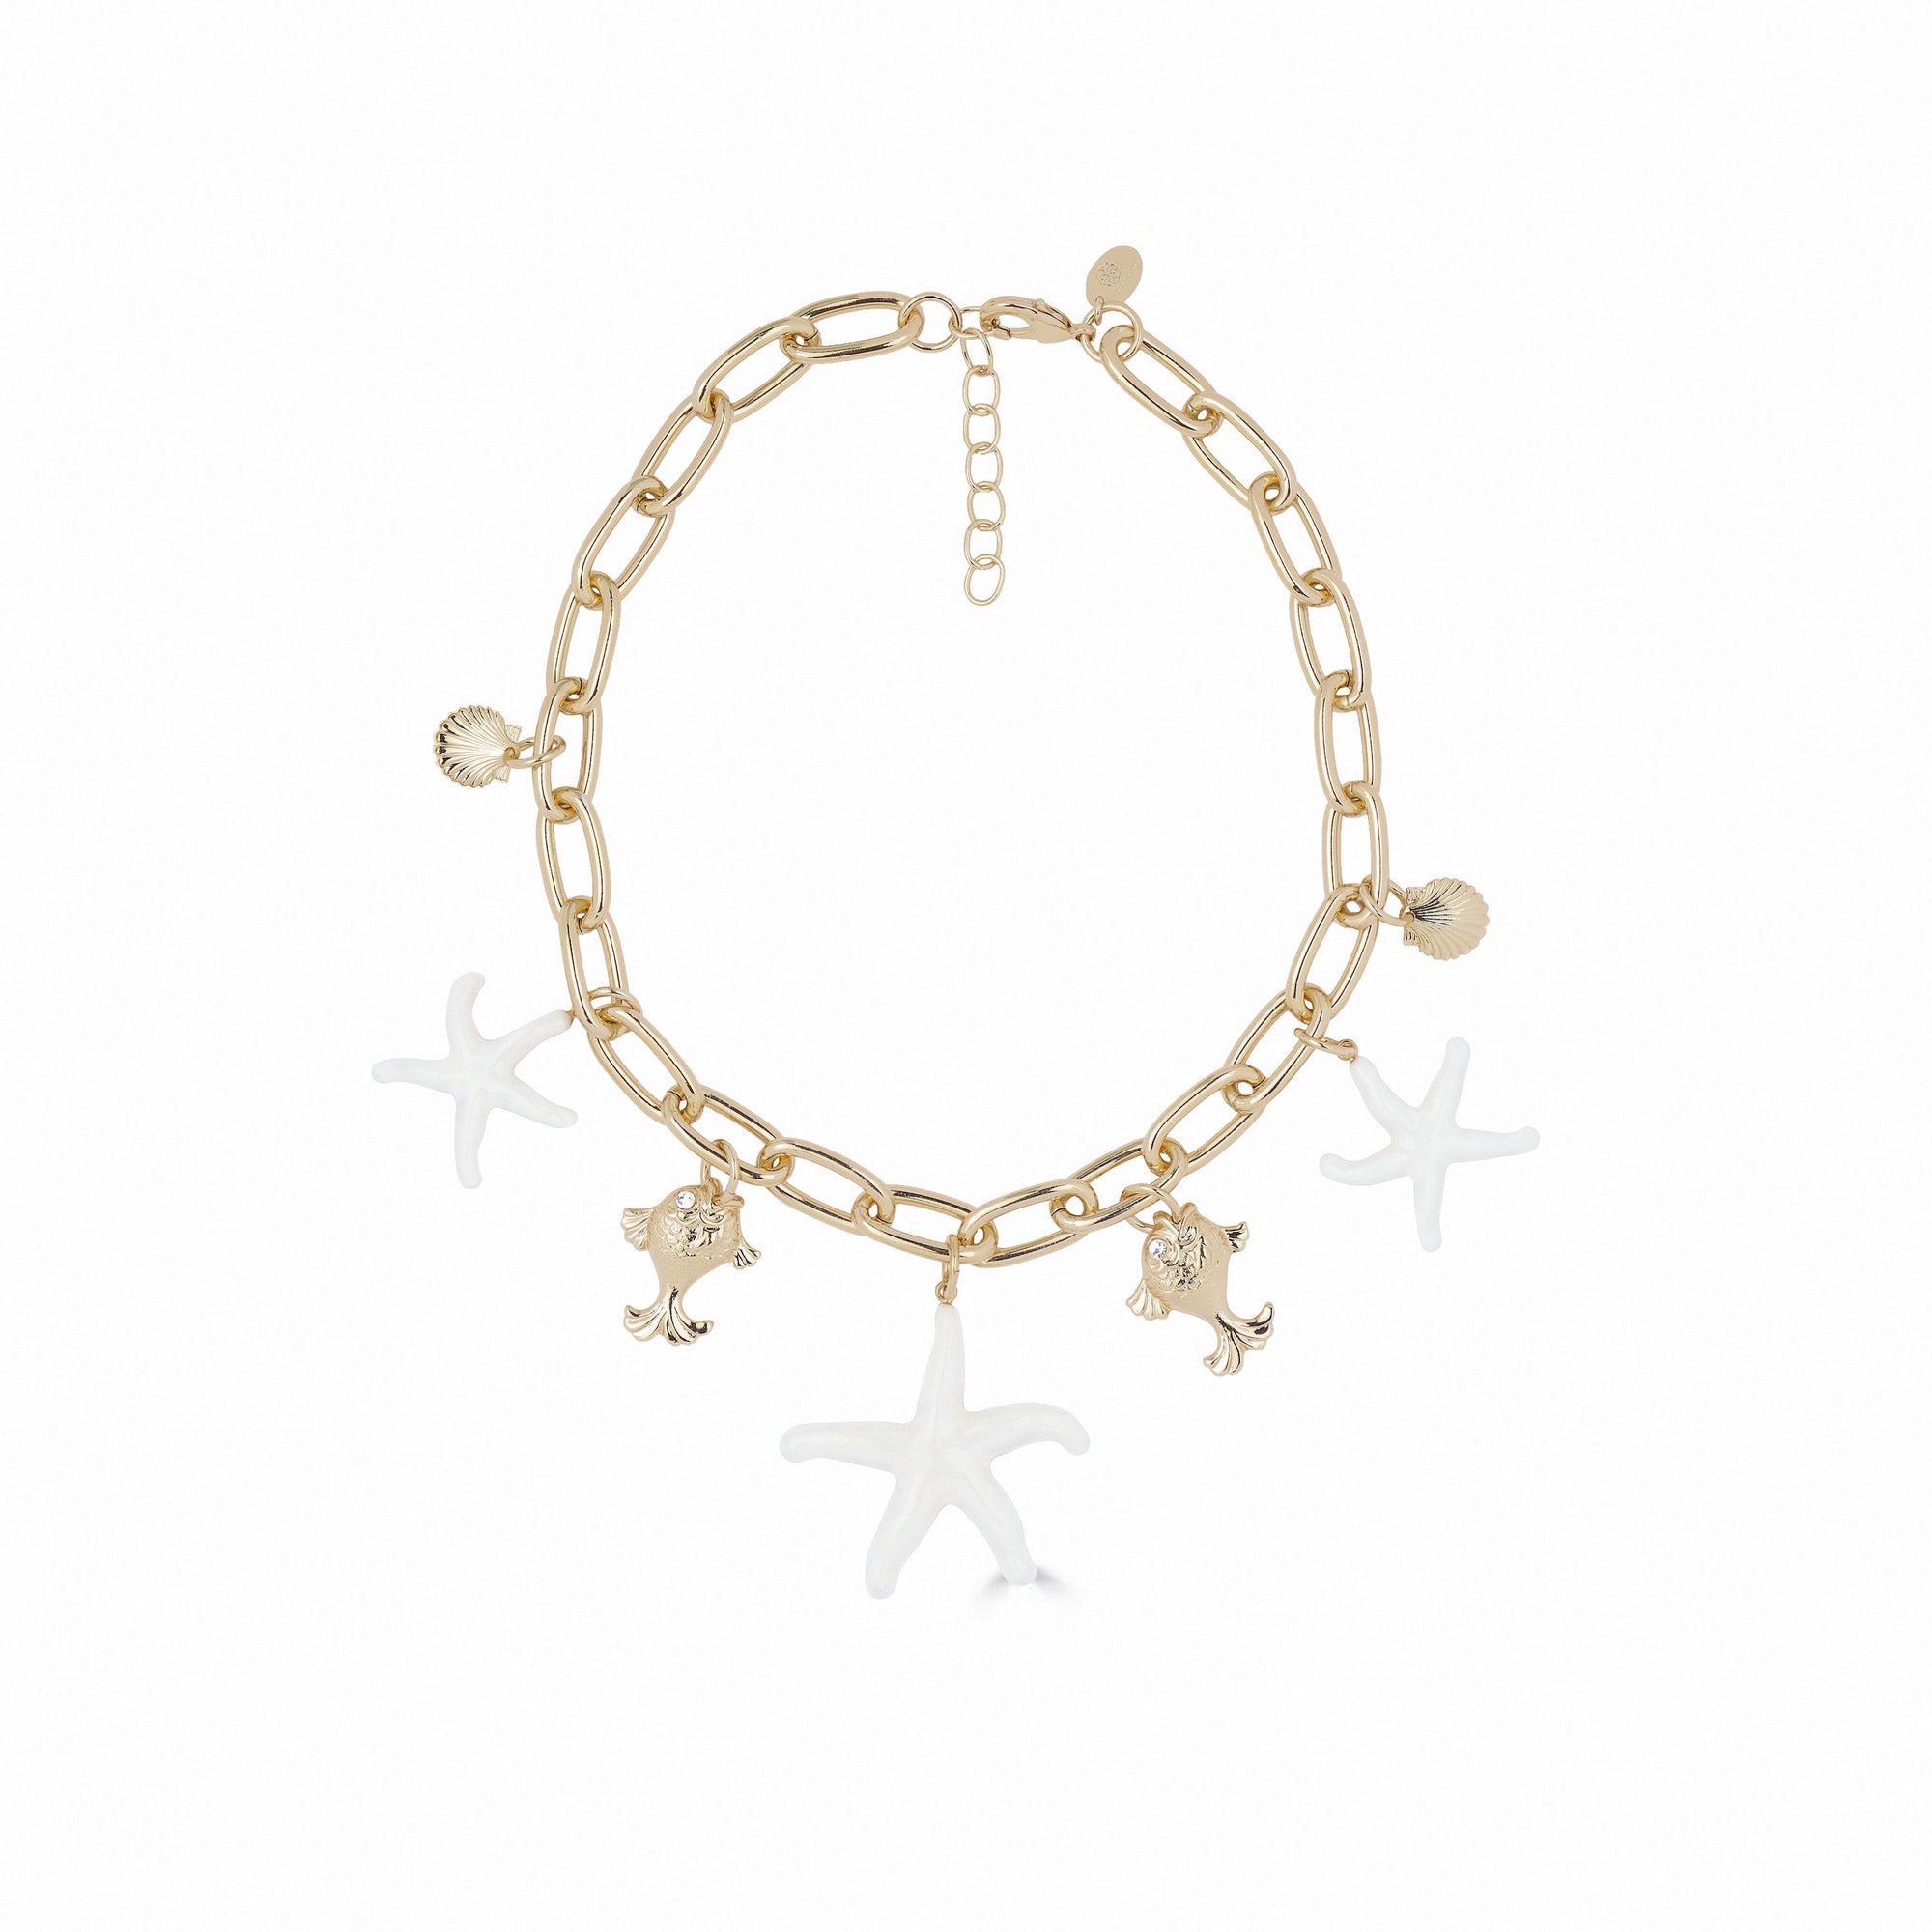 Starfish Chain Necklace - White